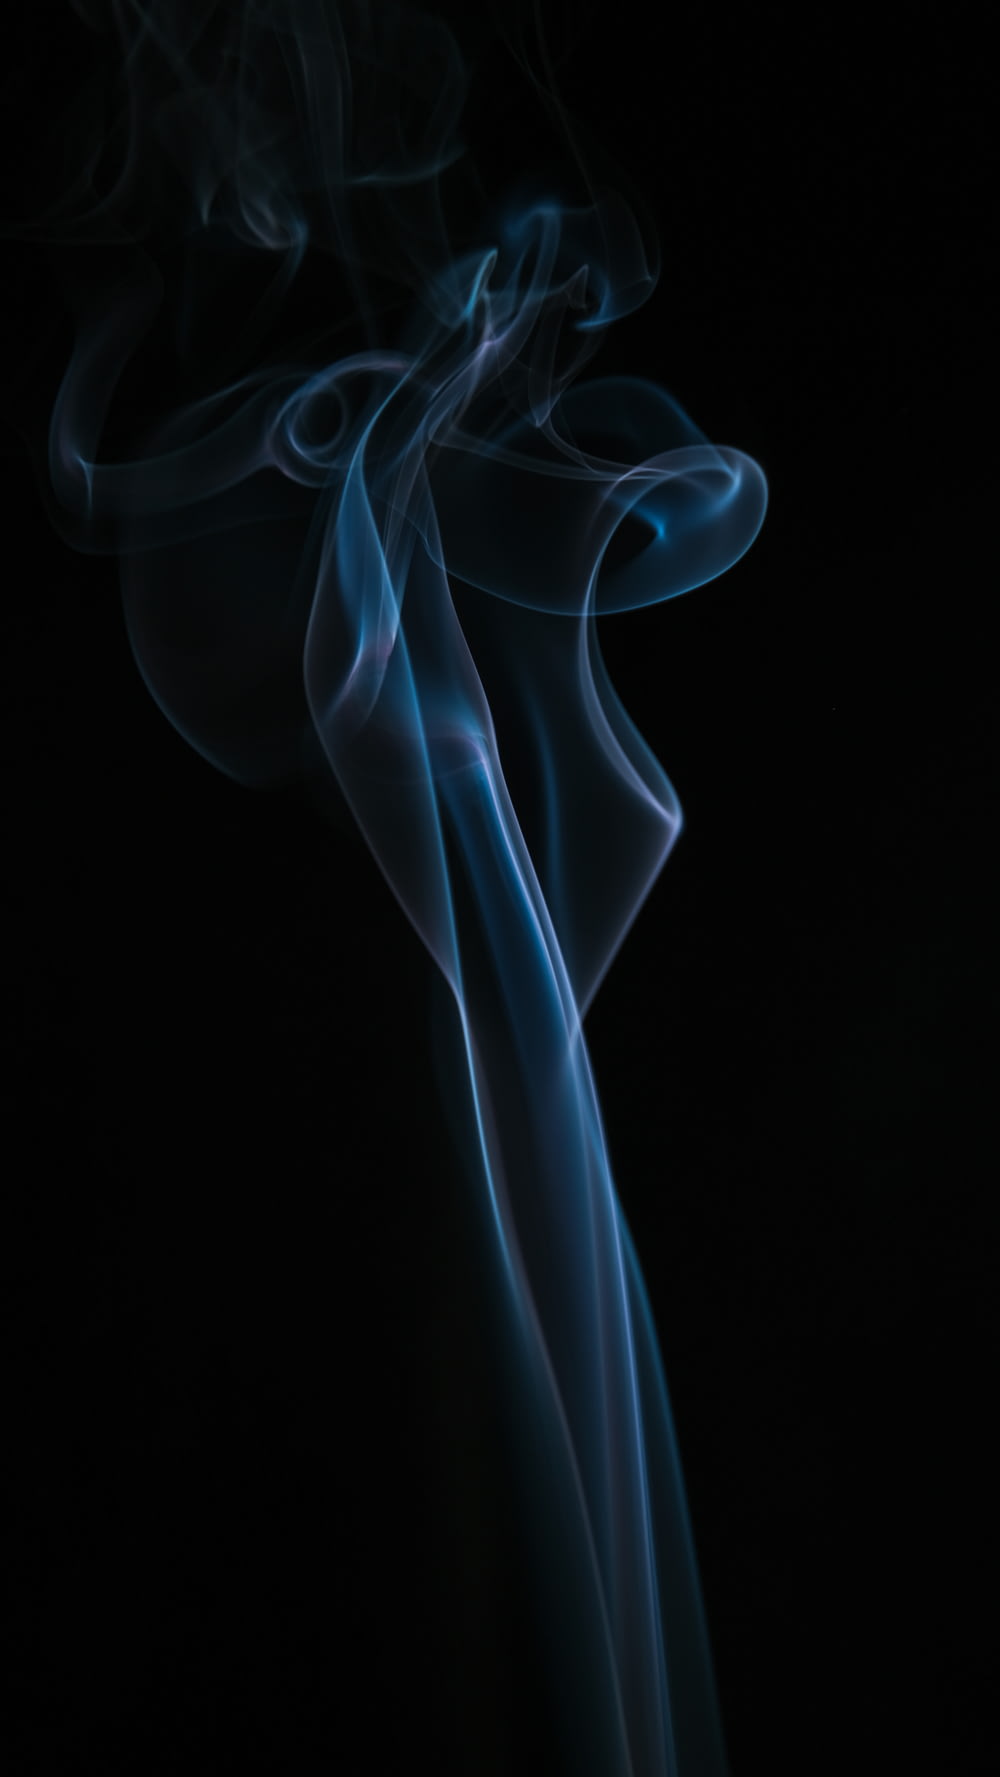 white and blue smoke illustration